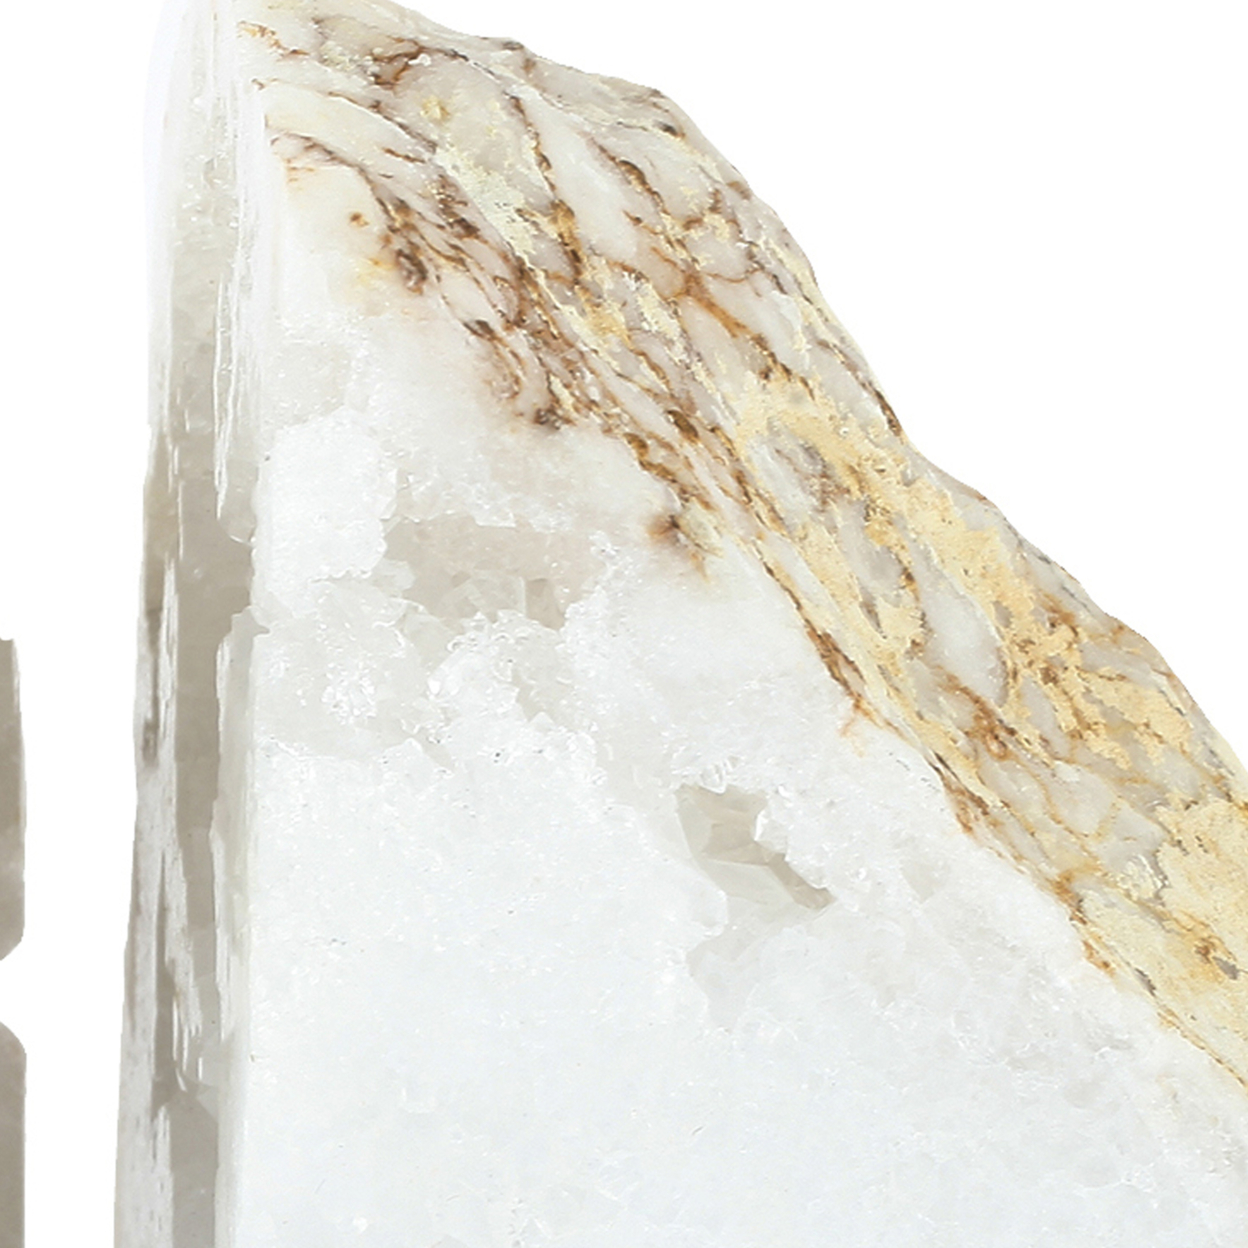 5 Inch Natural White Stone Bookends, Artisanal Textured Geode Rock- Saltoro Sherpi